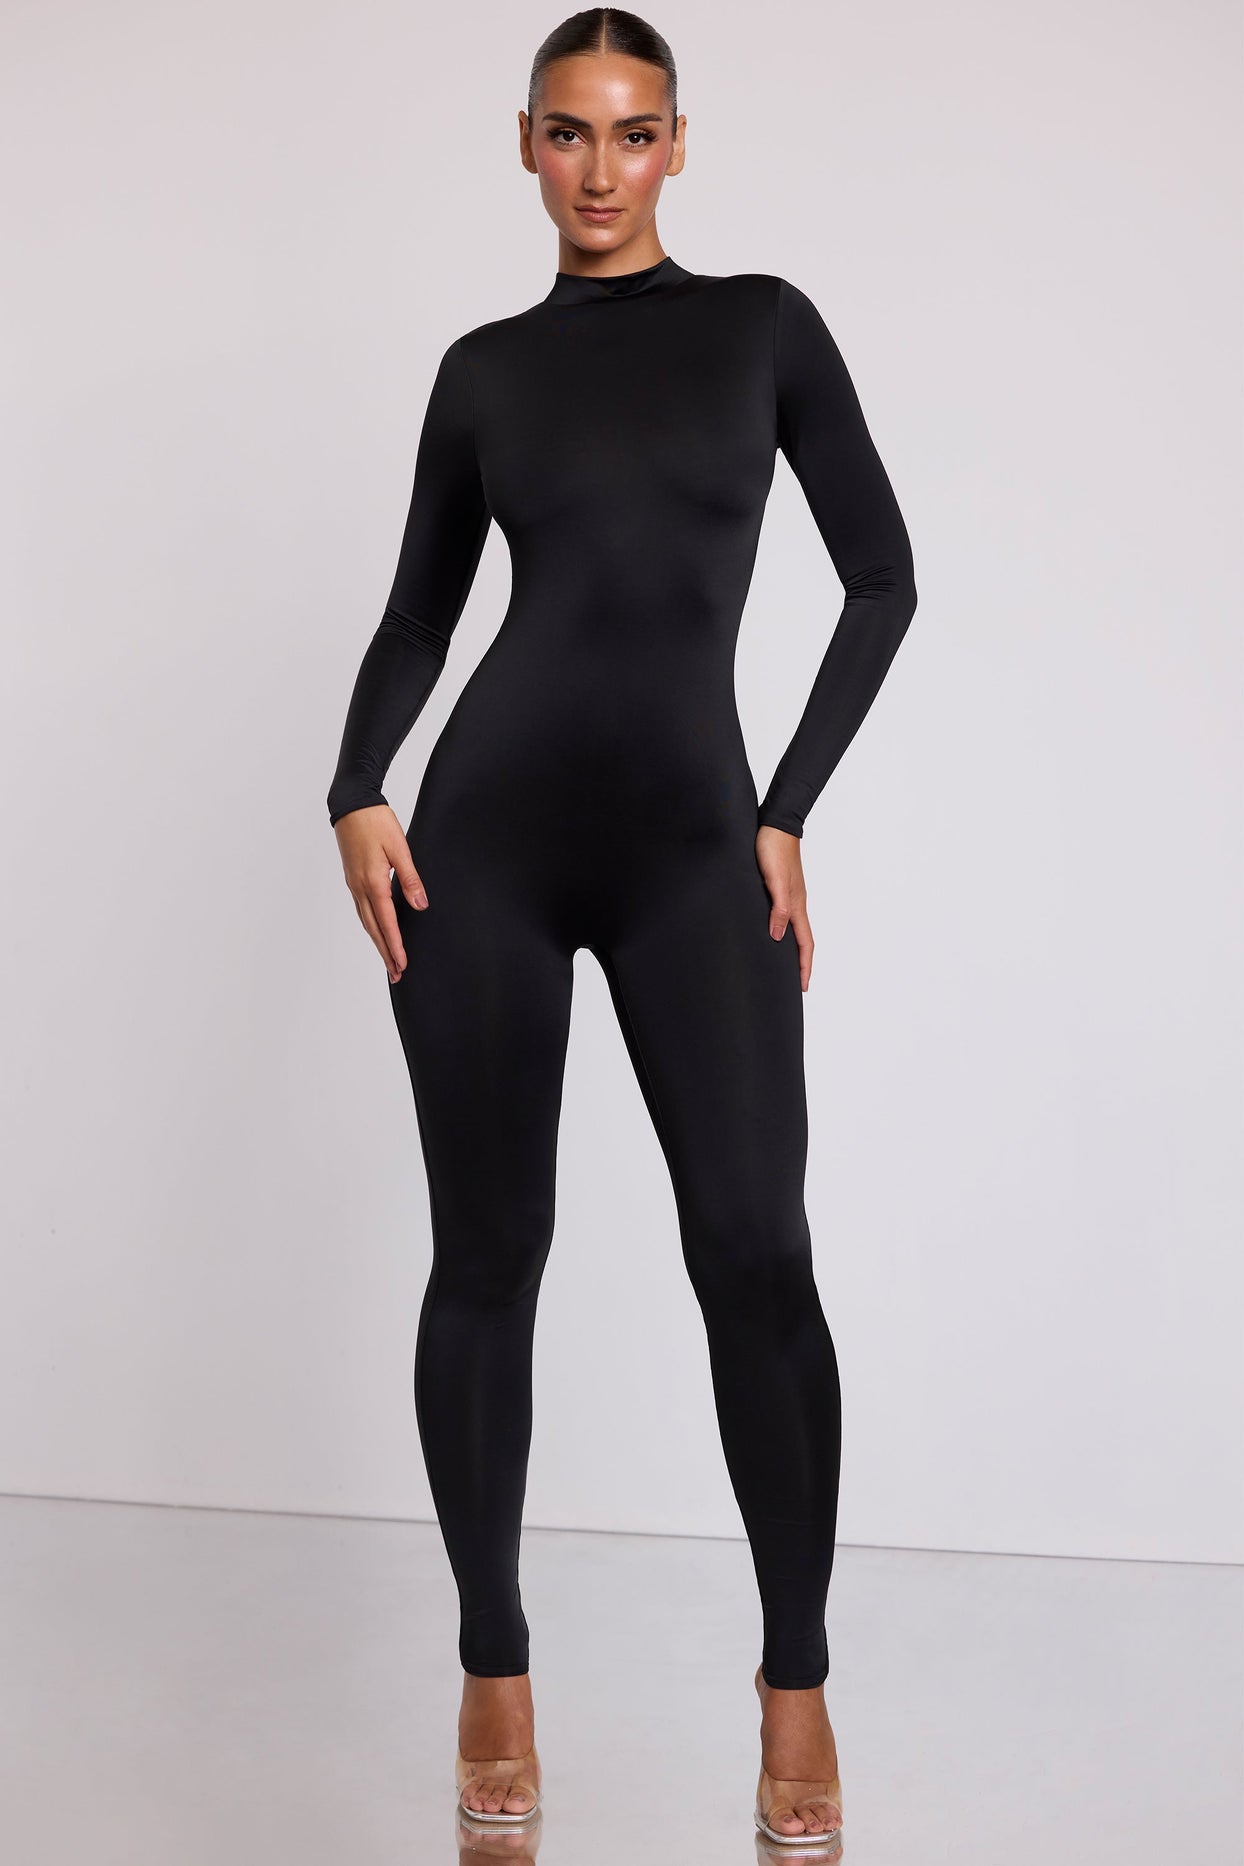 LIMITED COLLECTION Curve Black Corset Long Sleeve Jumpsuit